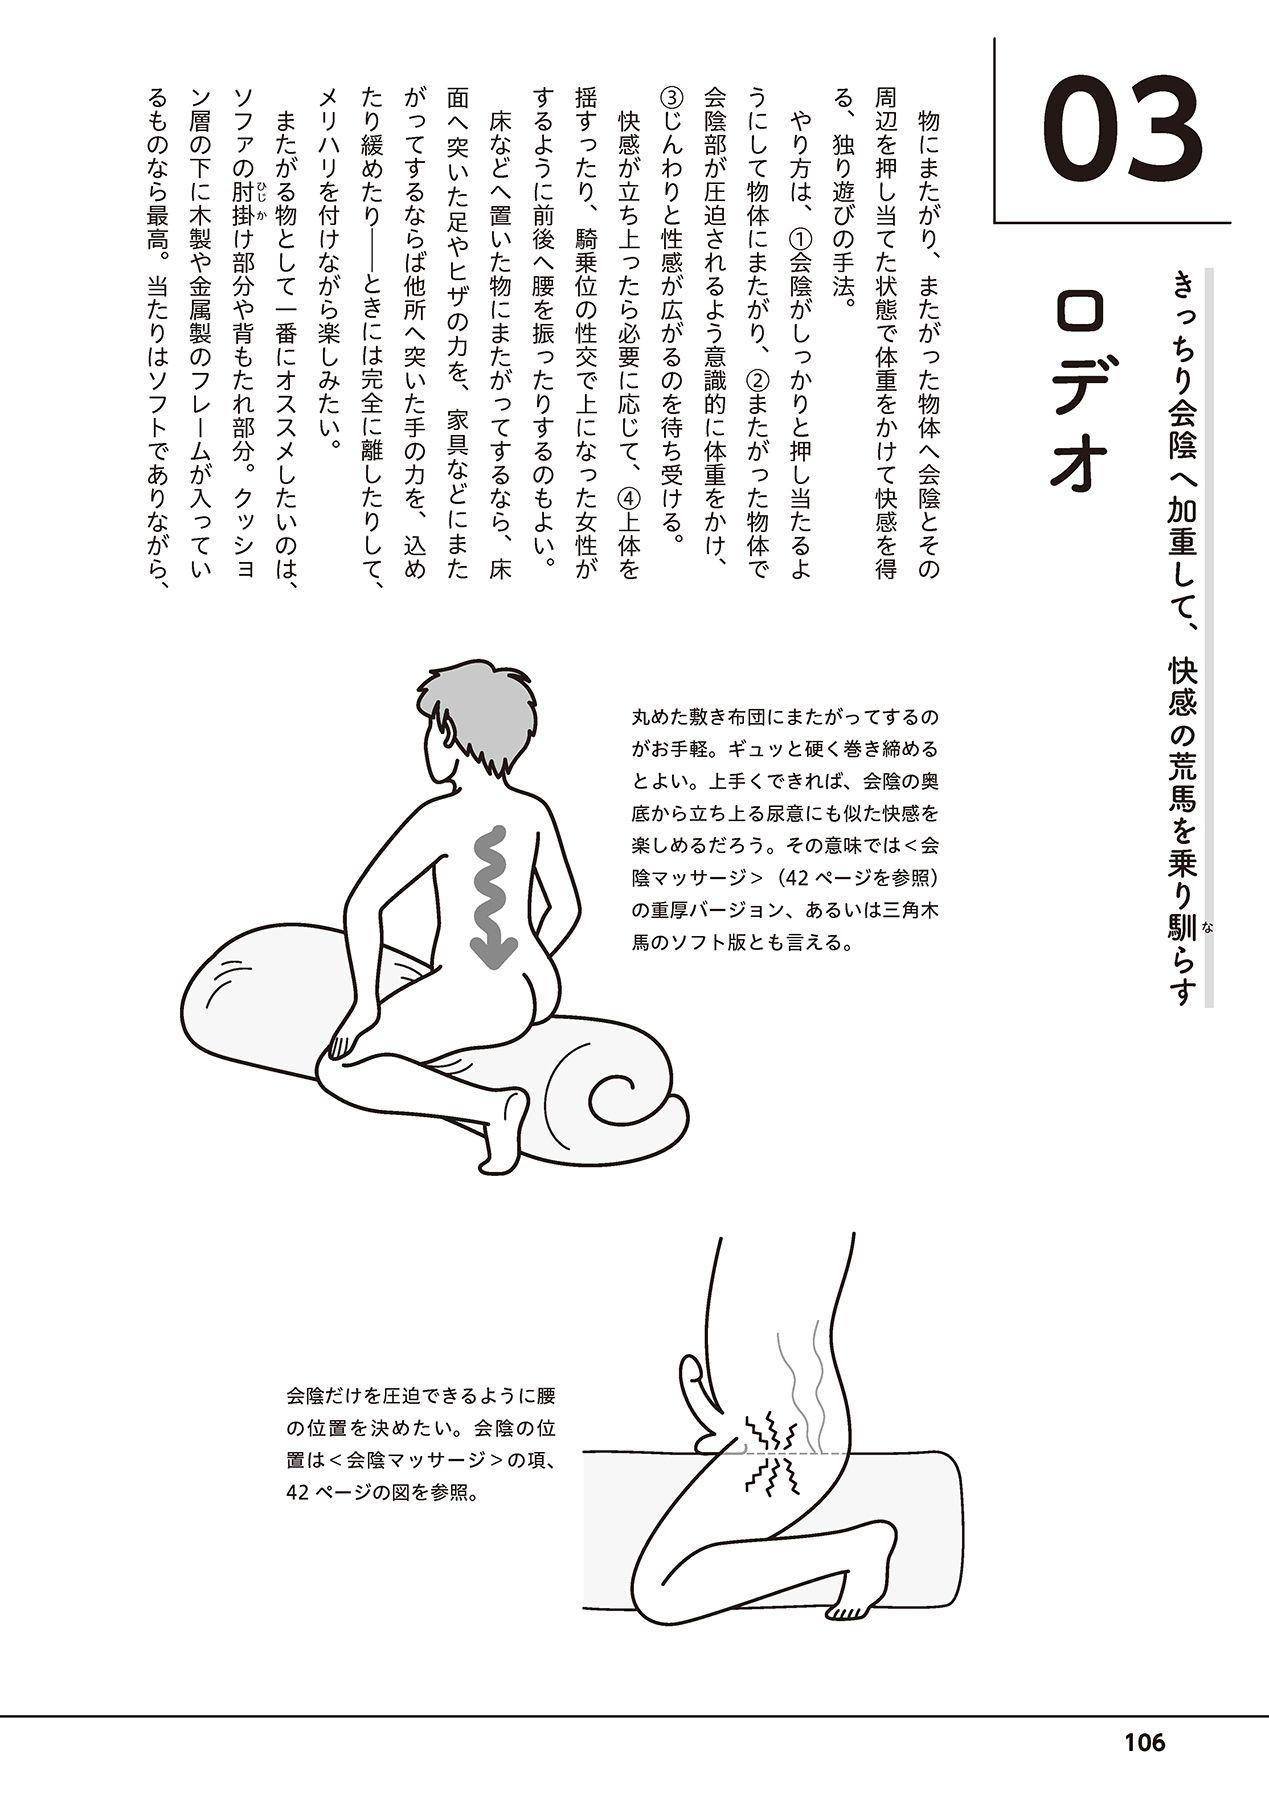 Otoko no Jii Onanie Kanzen Manual Illustration Han...... Onanie Play 107